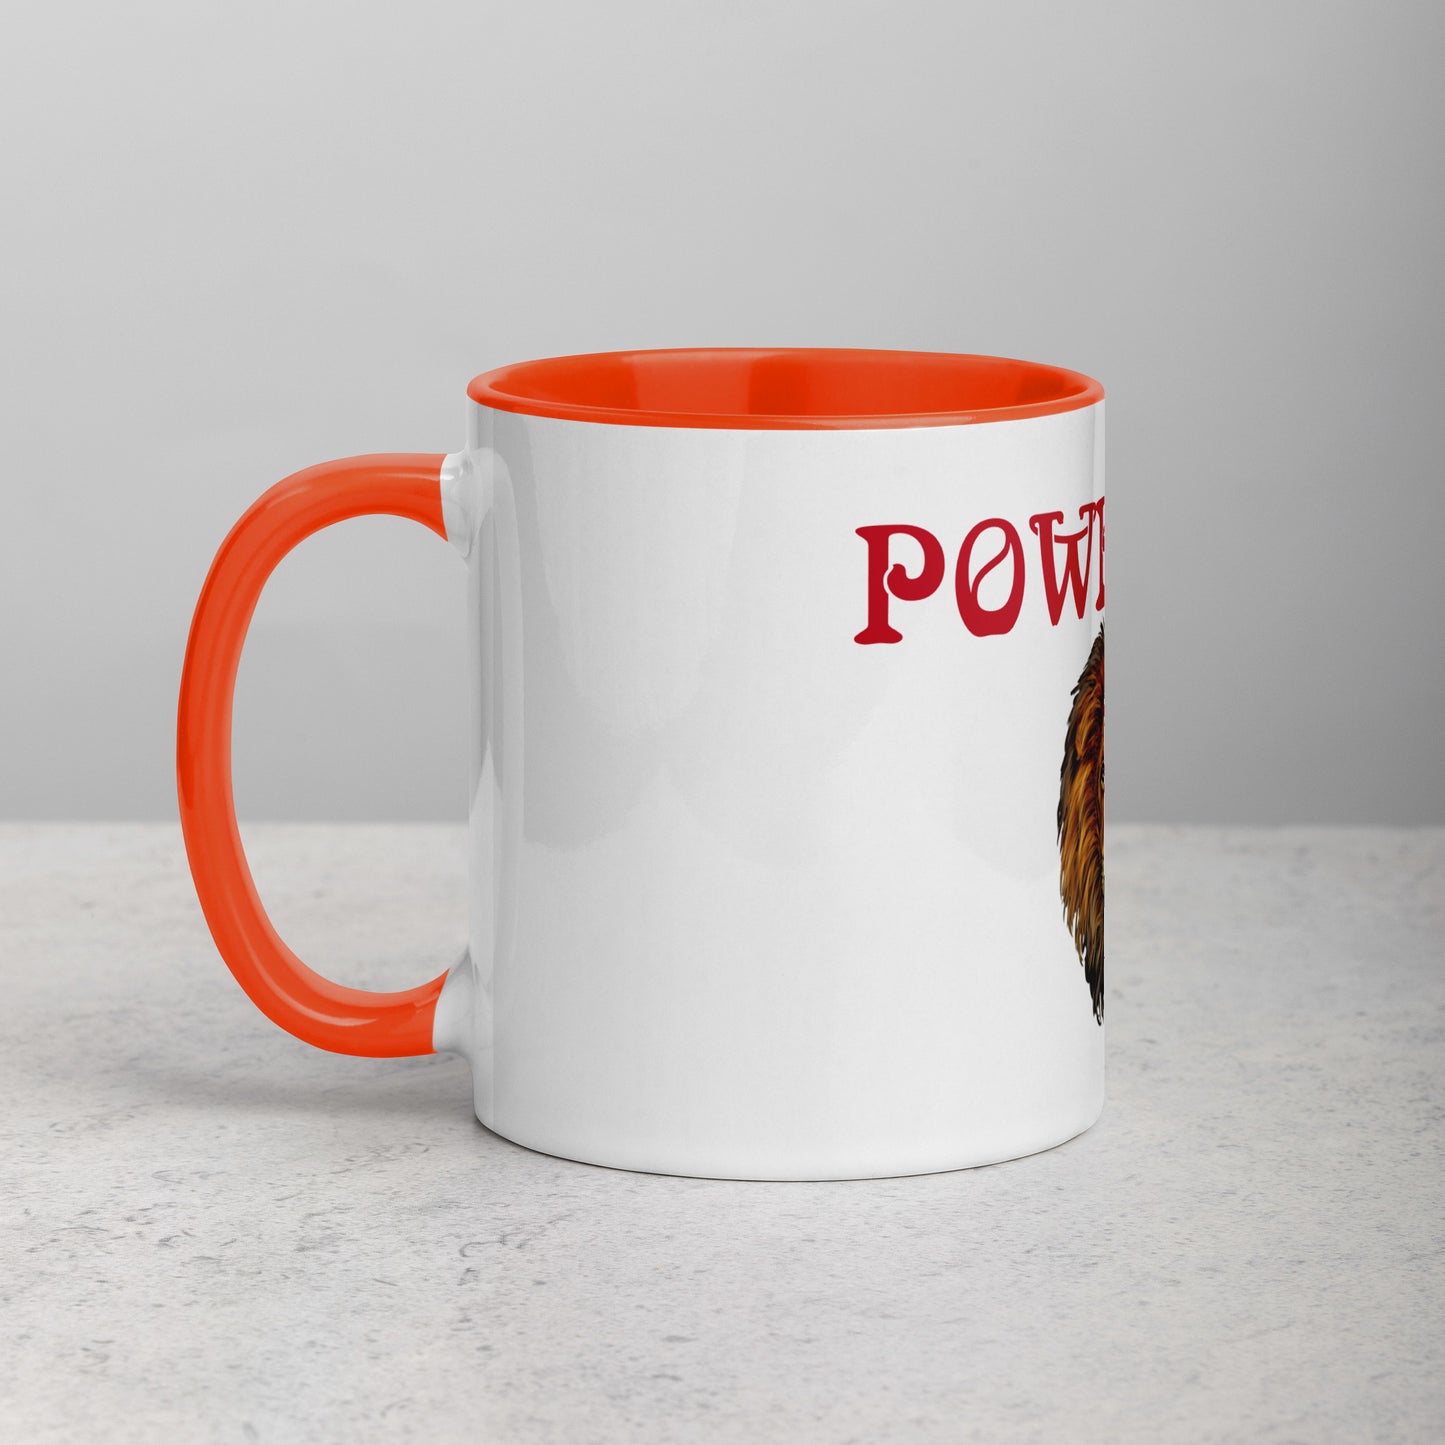 “POWERFUL!”Mug W/Color Inside W/Red Font